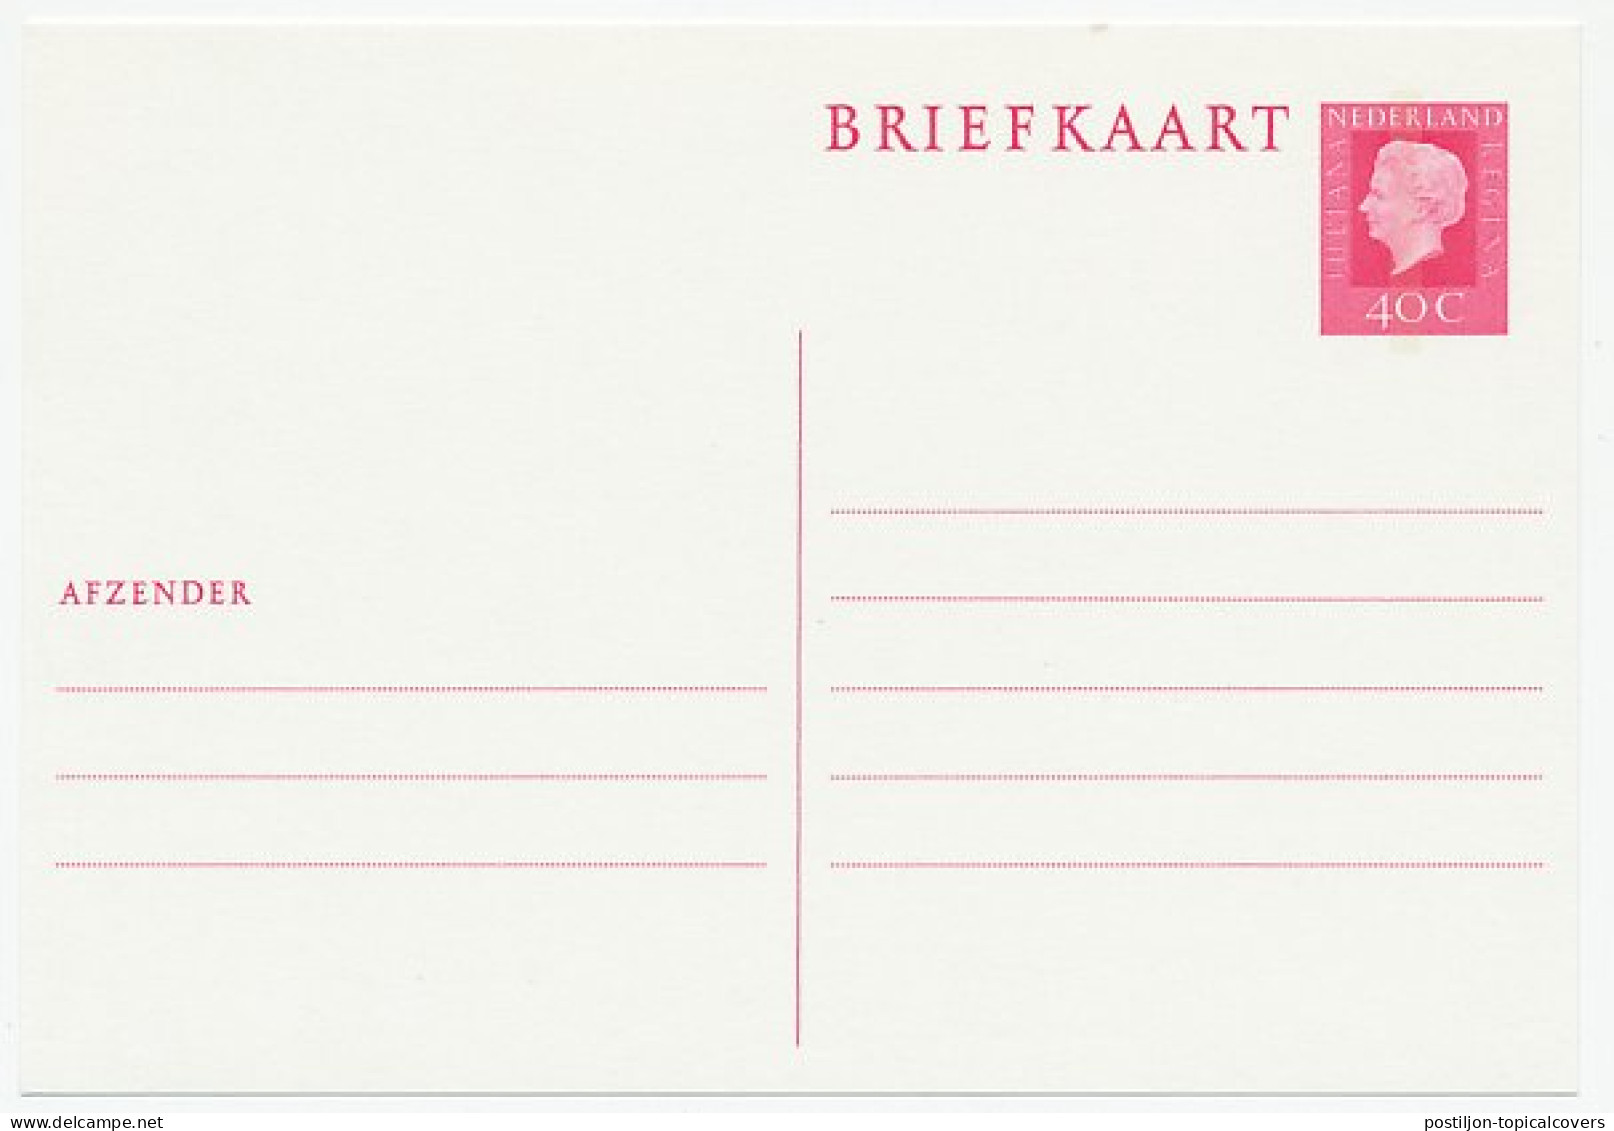 Briefkaart G. 356 - Interi Postali